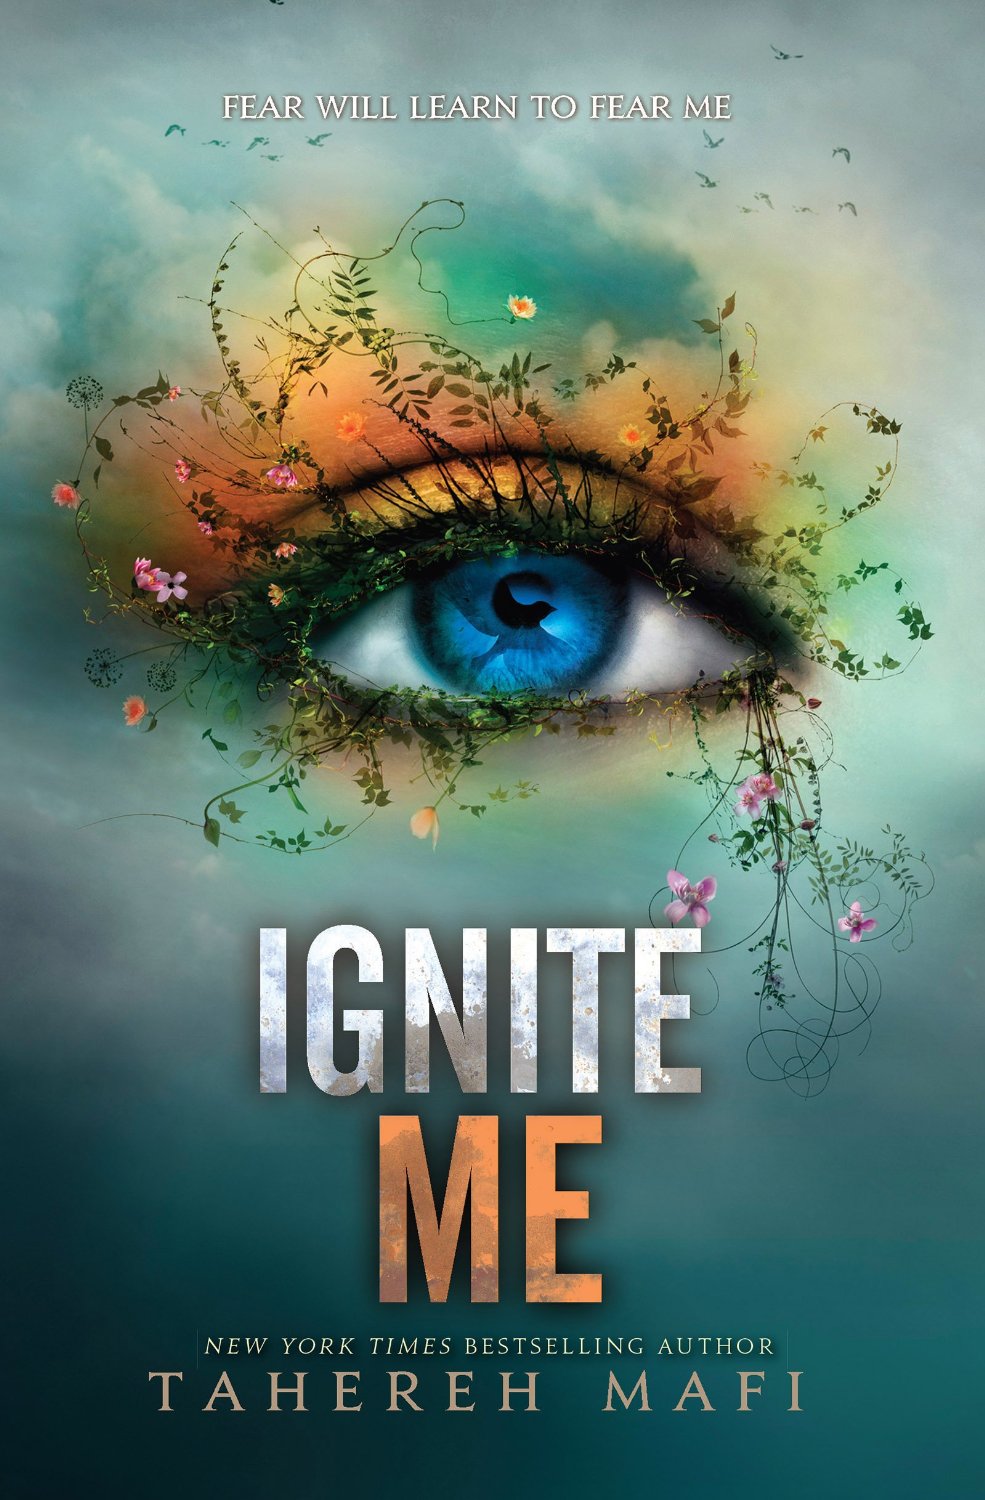 FEBRERO 2016: "Ignite me" - Taereh Mafi. 81jtwxcyvsl-_sl1500_